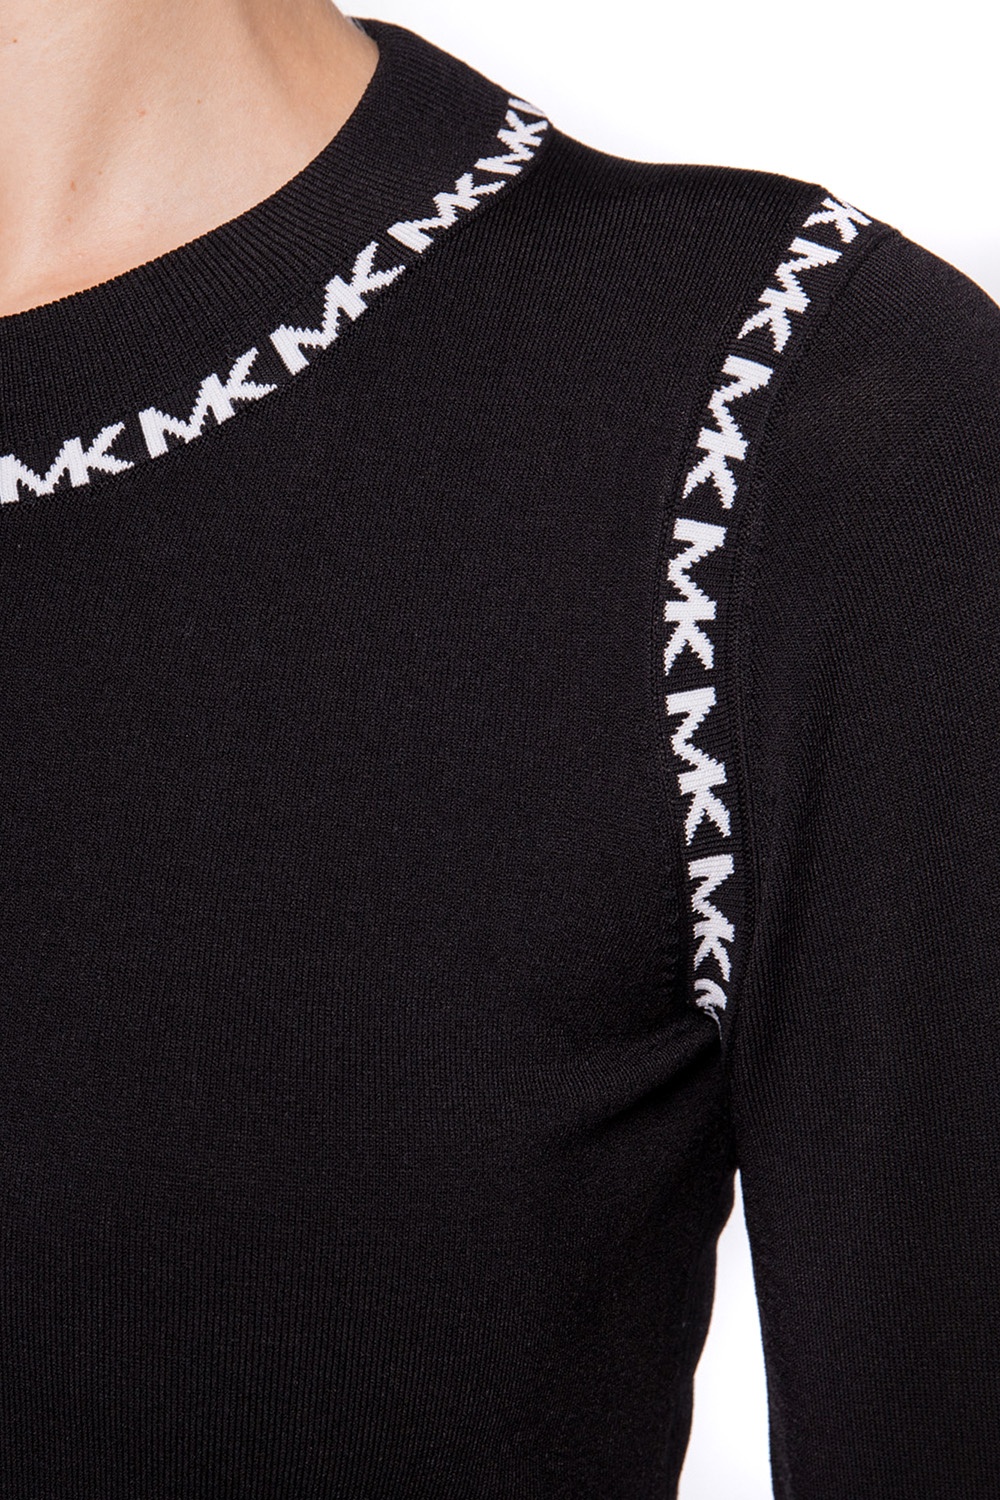 michael kors logo sweater